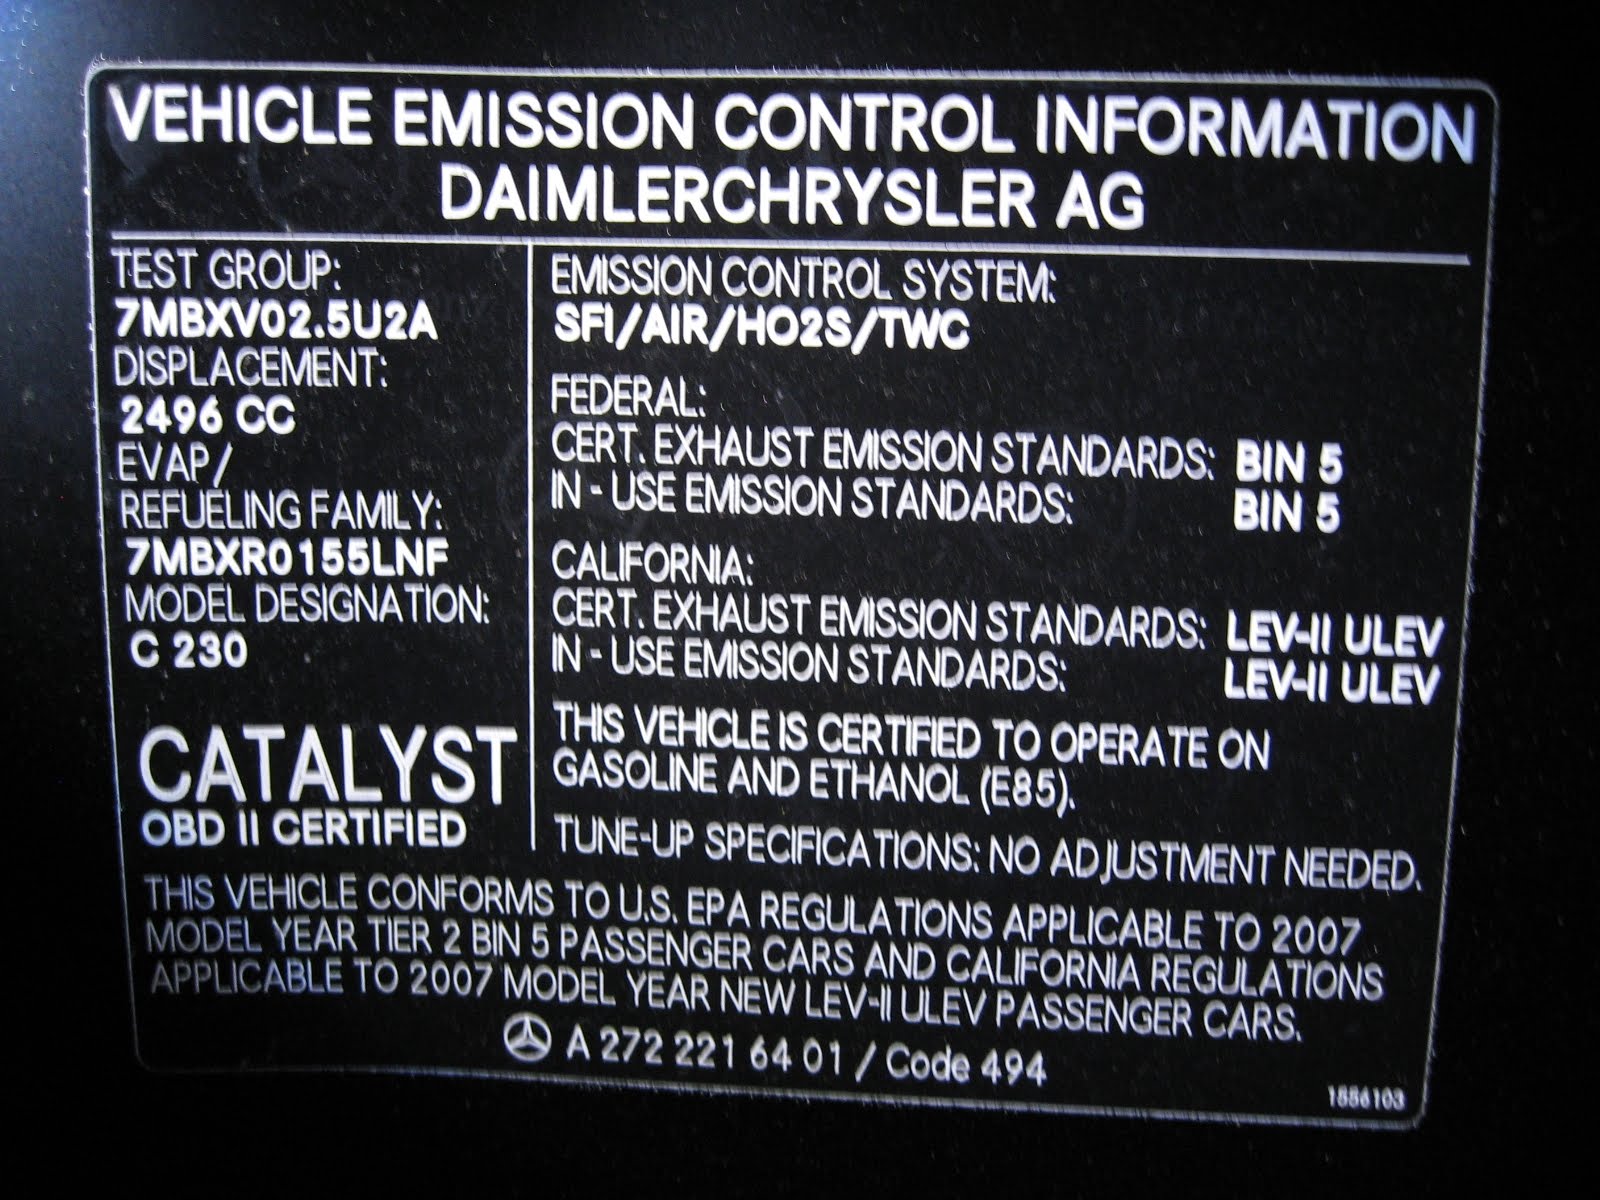 [emission-control-info.JPG]